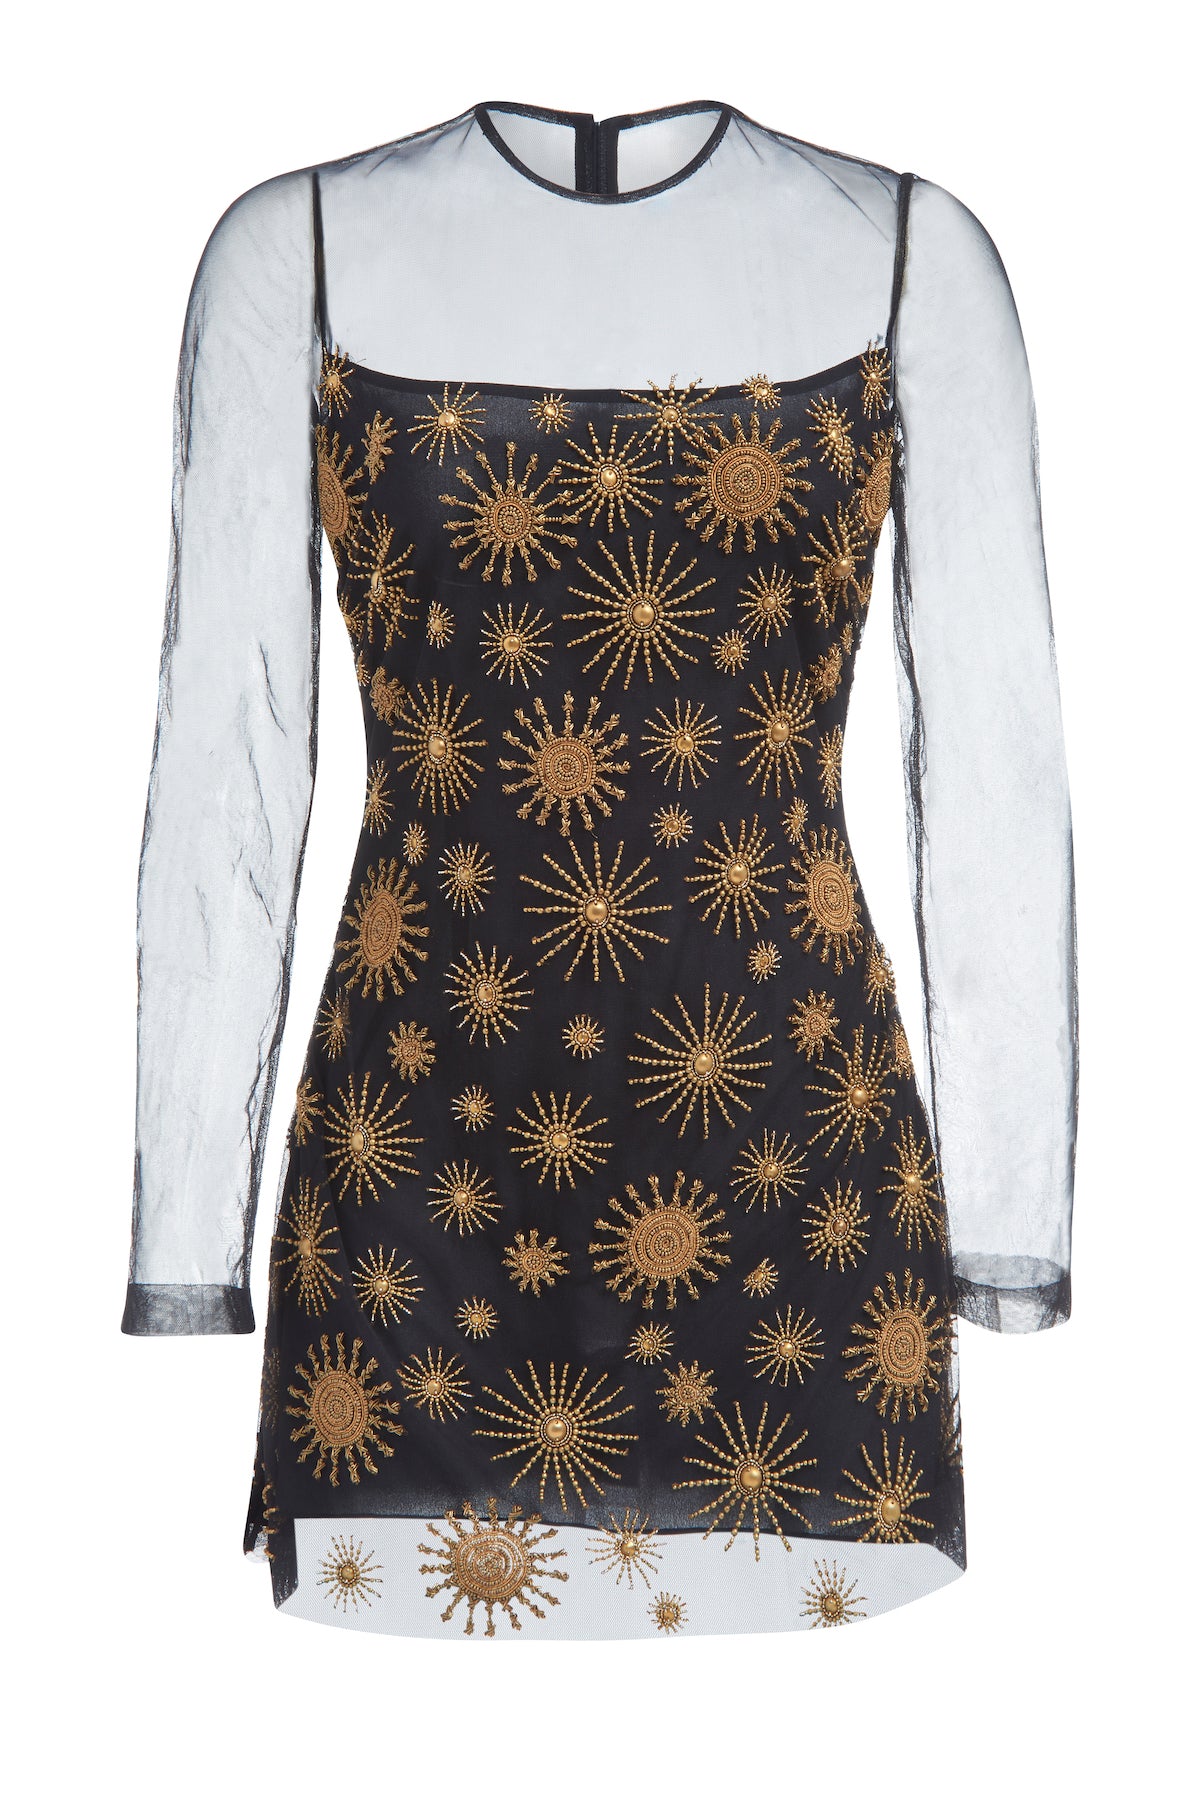 Protea Black Sheer Sleeve Hand Beaded Gold Starburst Mini Dress